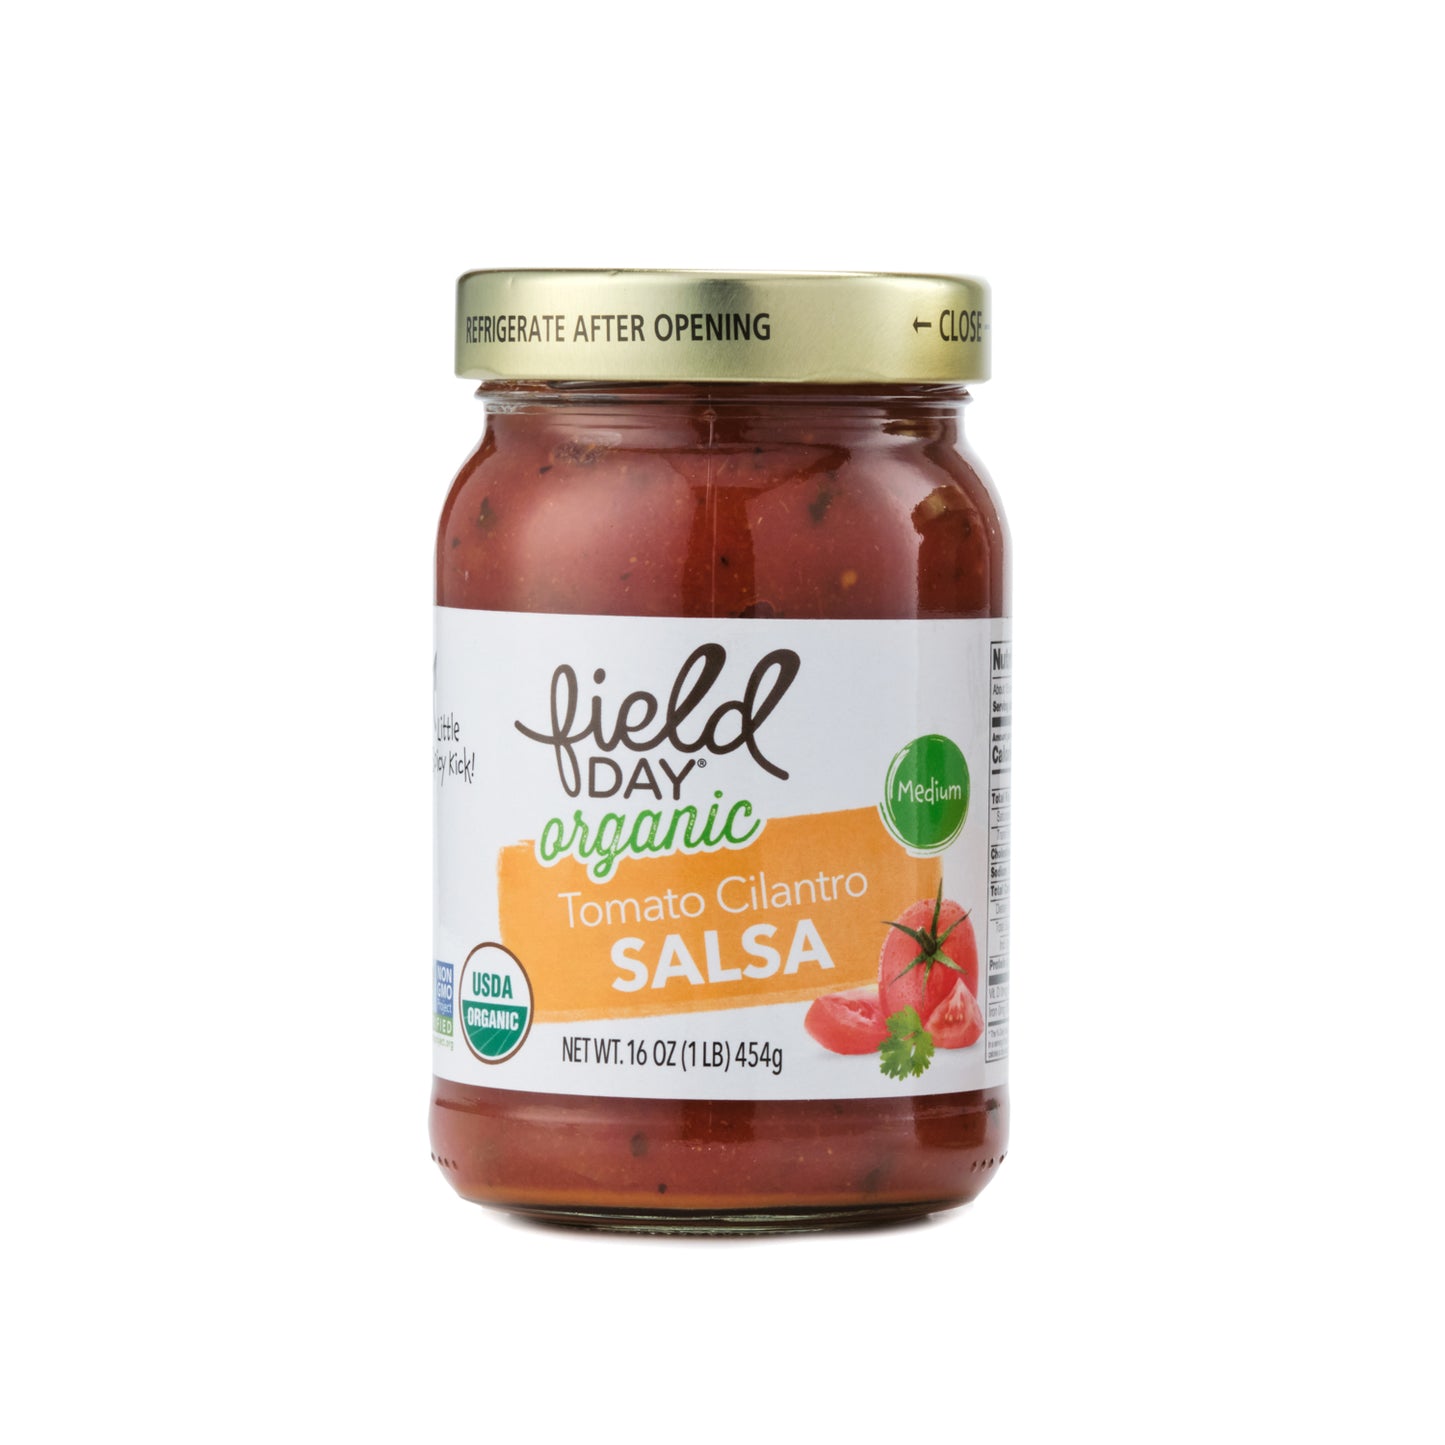 Field Day Organic Tomato Cilantro Medium Salsa 454g